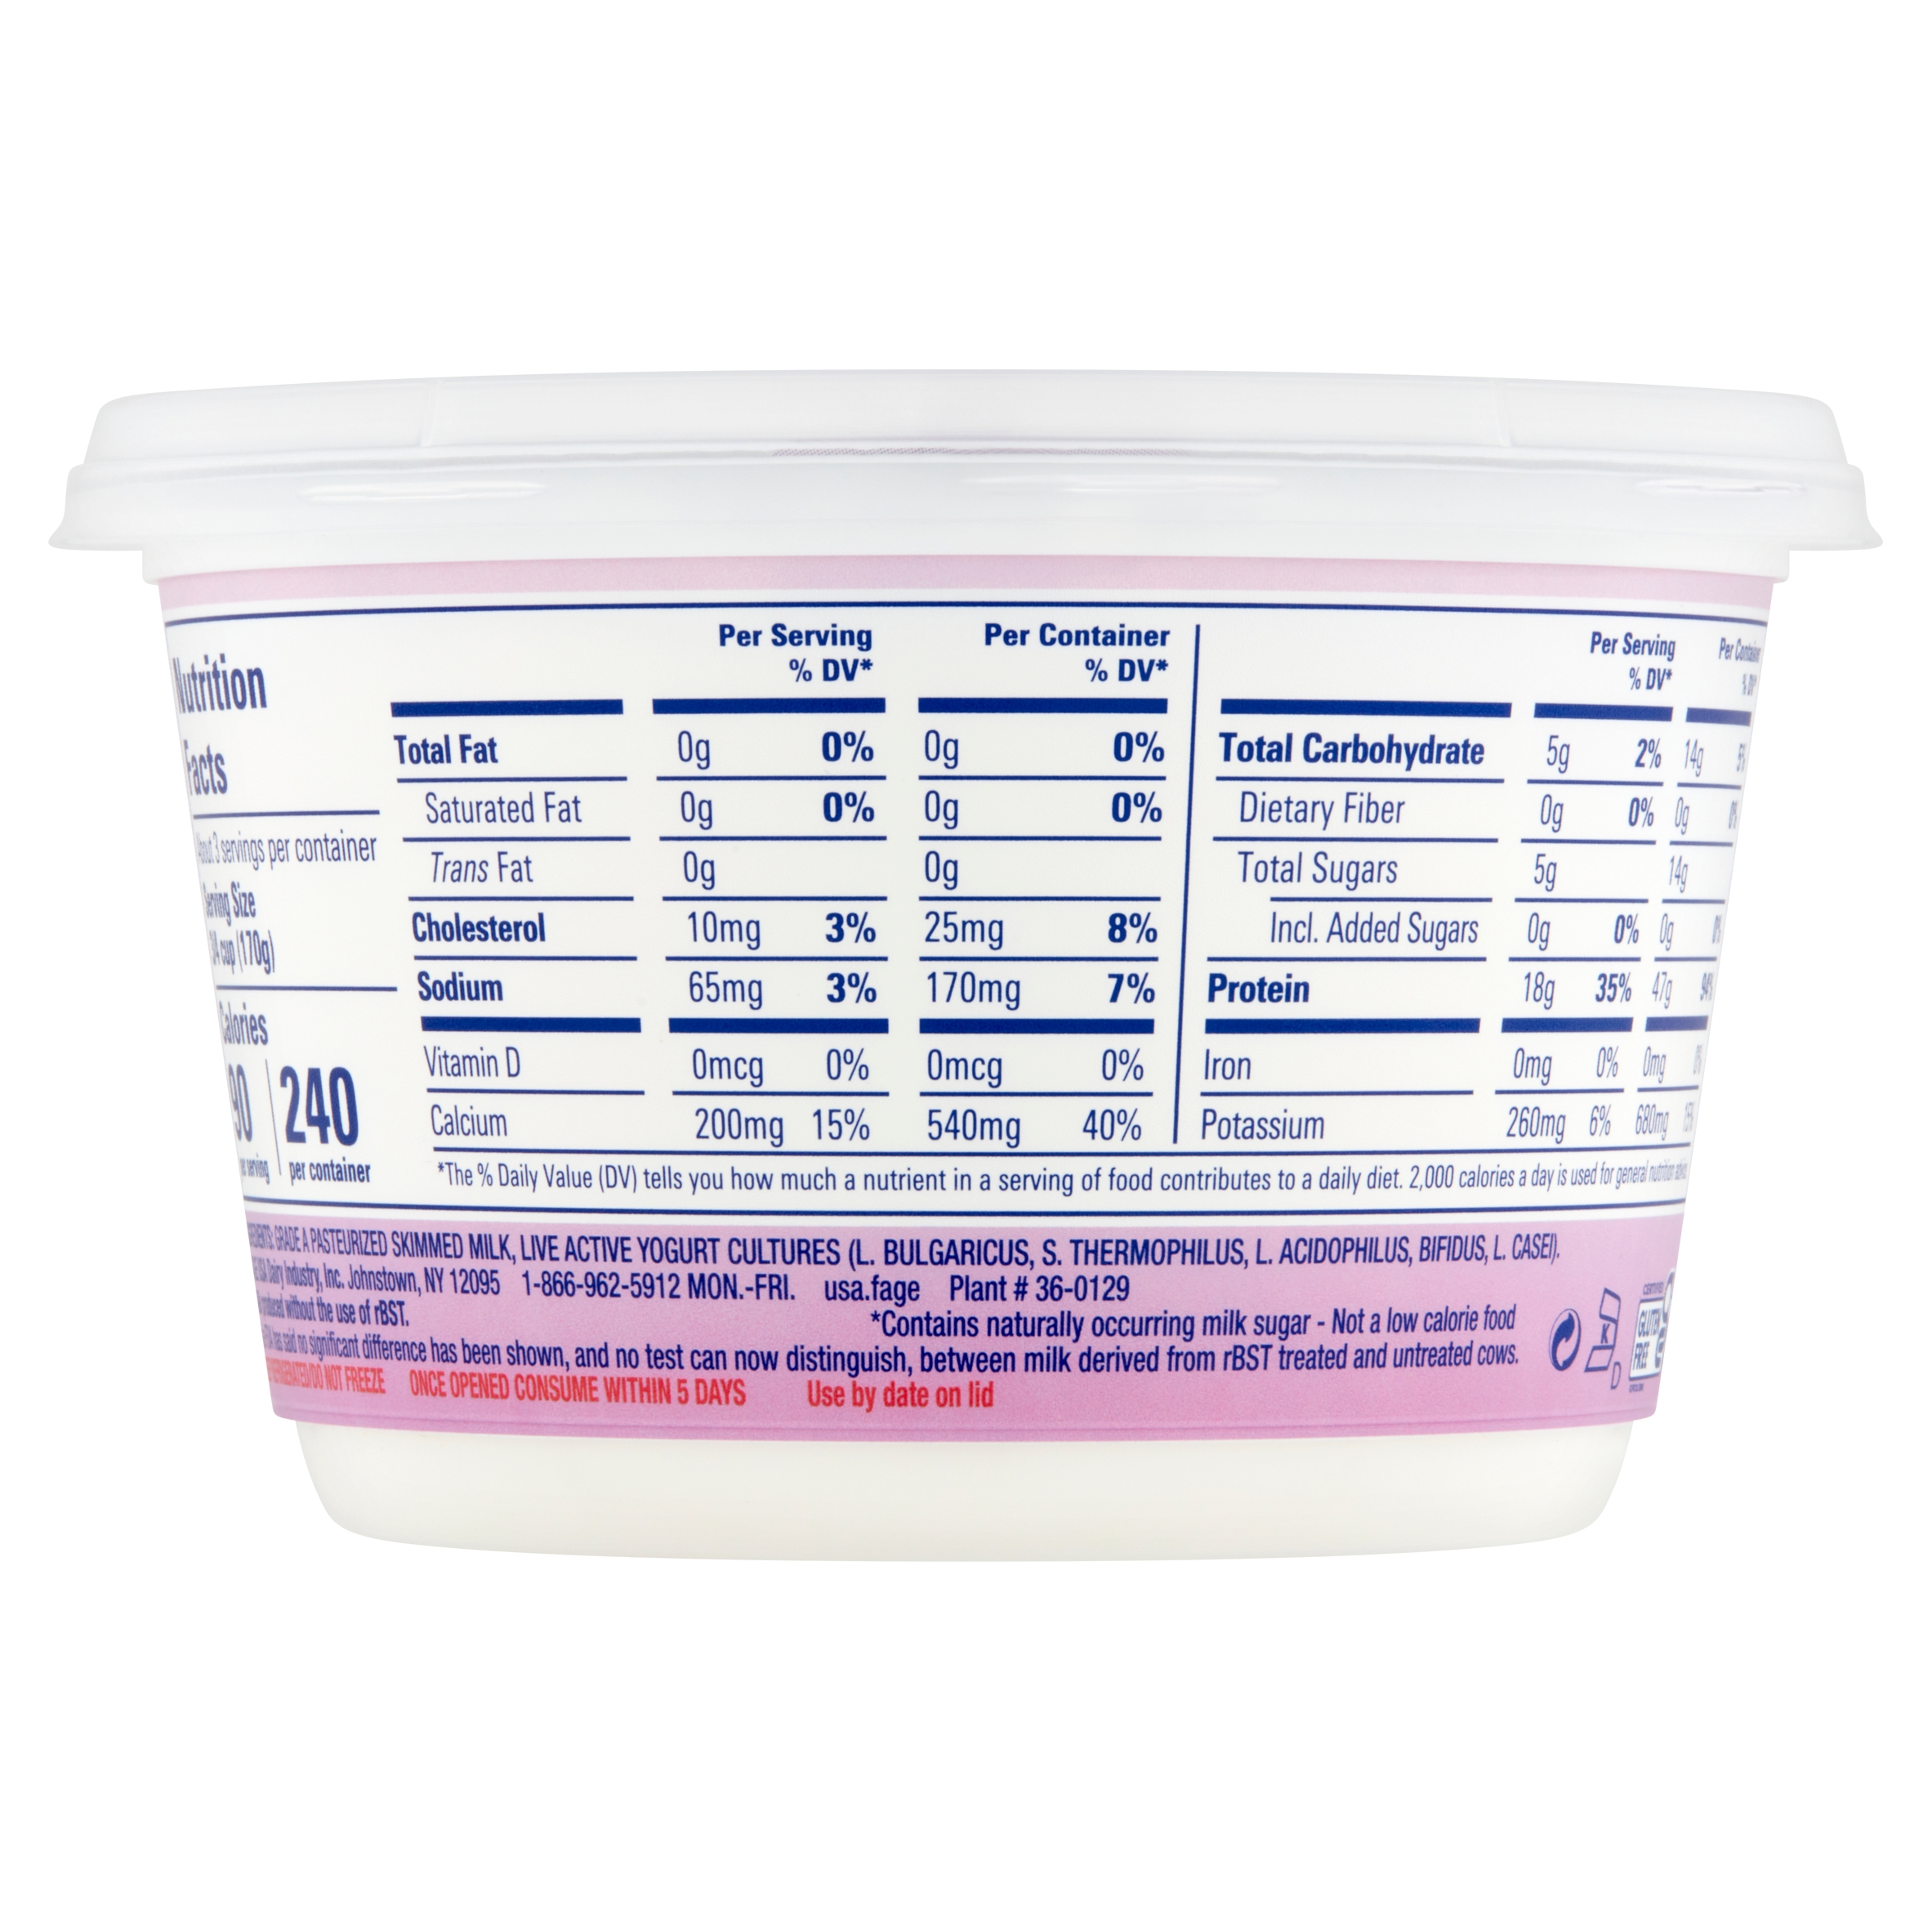 FAGE Total All Natural Nonfat Plain Greek Strained Yogurt, 16 oz - image 4 of 7